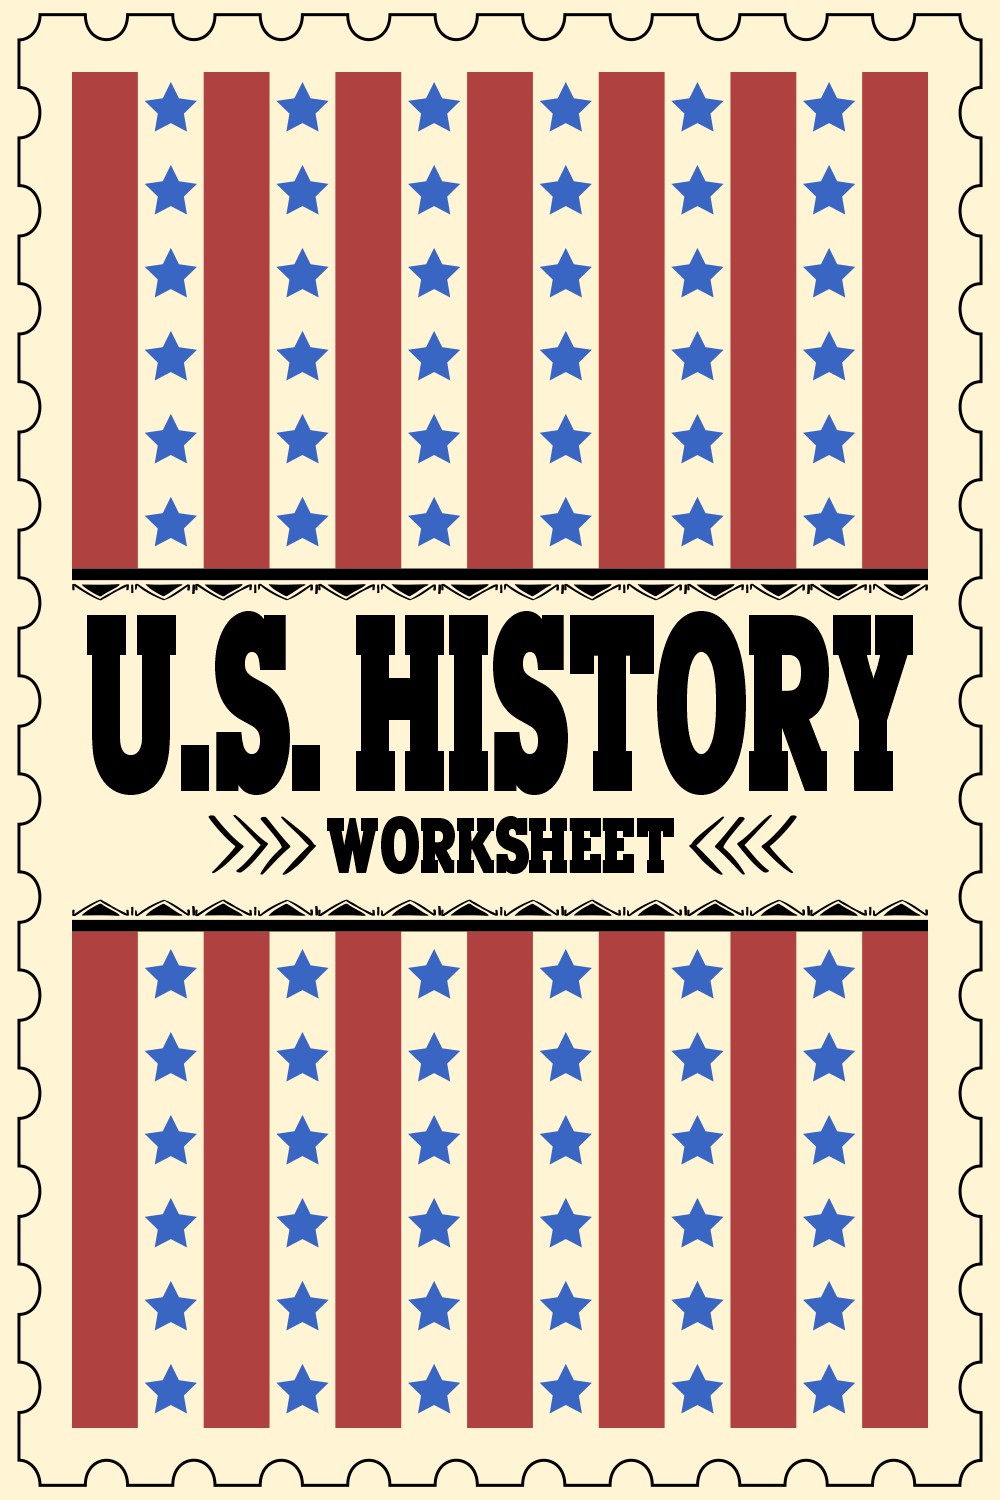 17 Images of U.S. History Worksheets